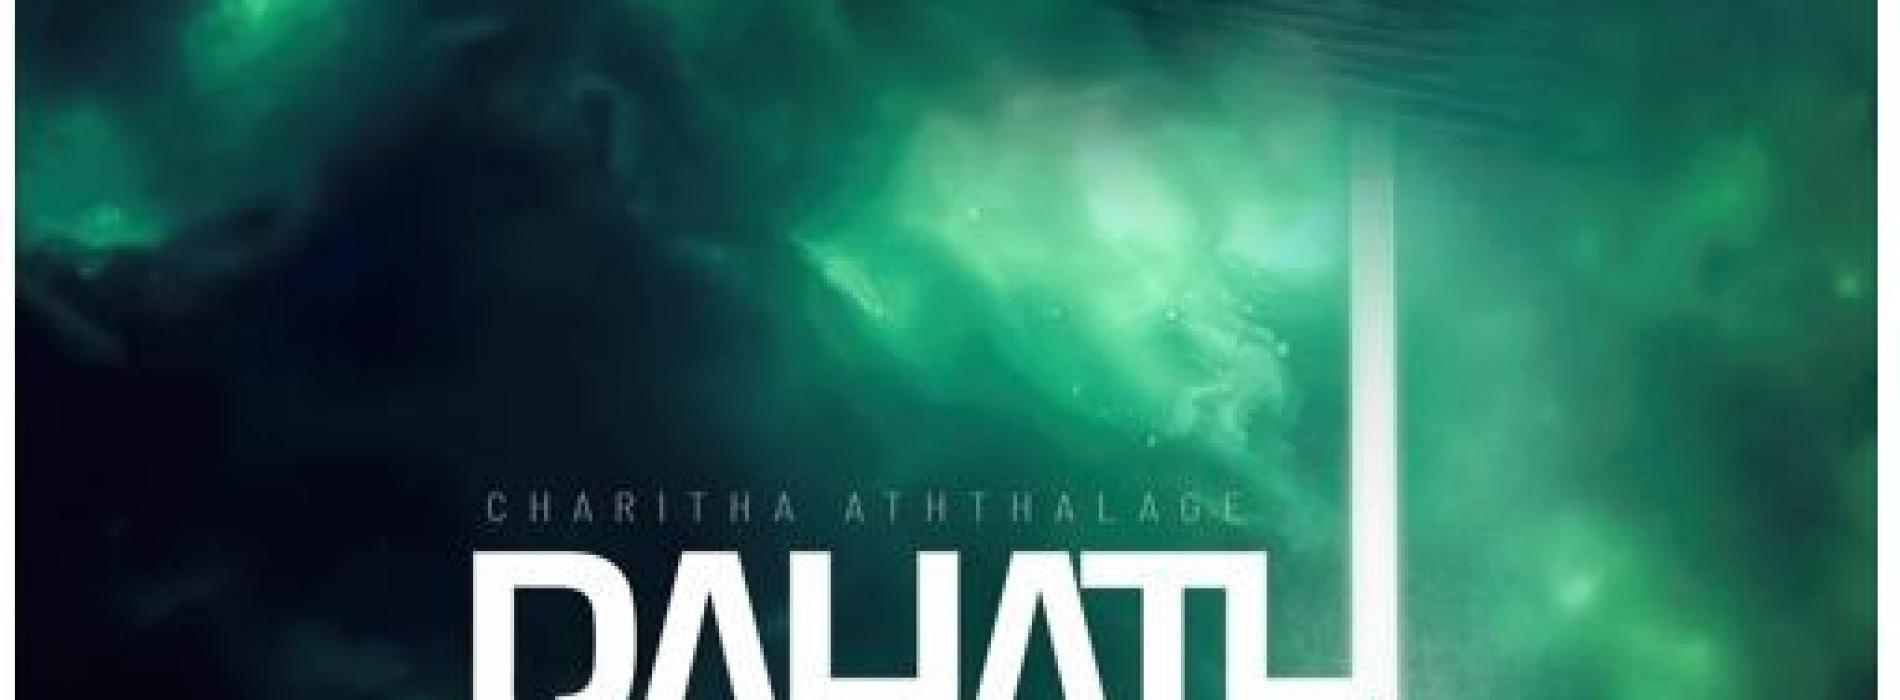 New Music : Charitha Attalage – Rahath Himiwarun රහත් හිමිවරුන් (VegaZ SL Bootleg)